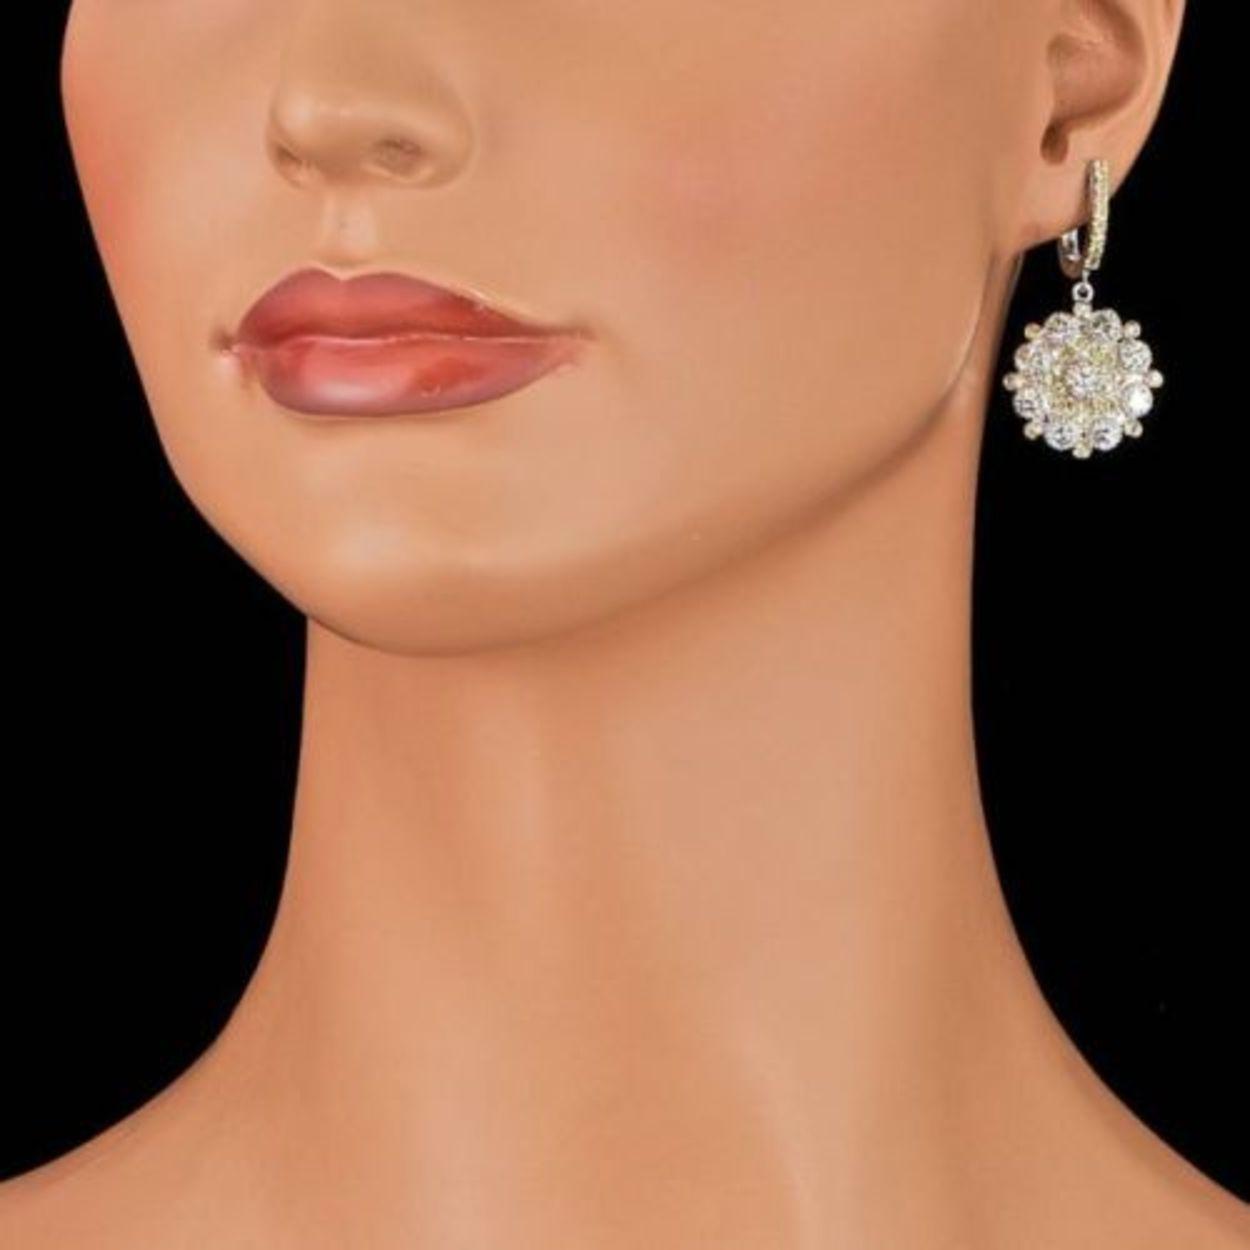 14k Gold 1.27ct Diamond 3.53ct Sapphire Earrings